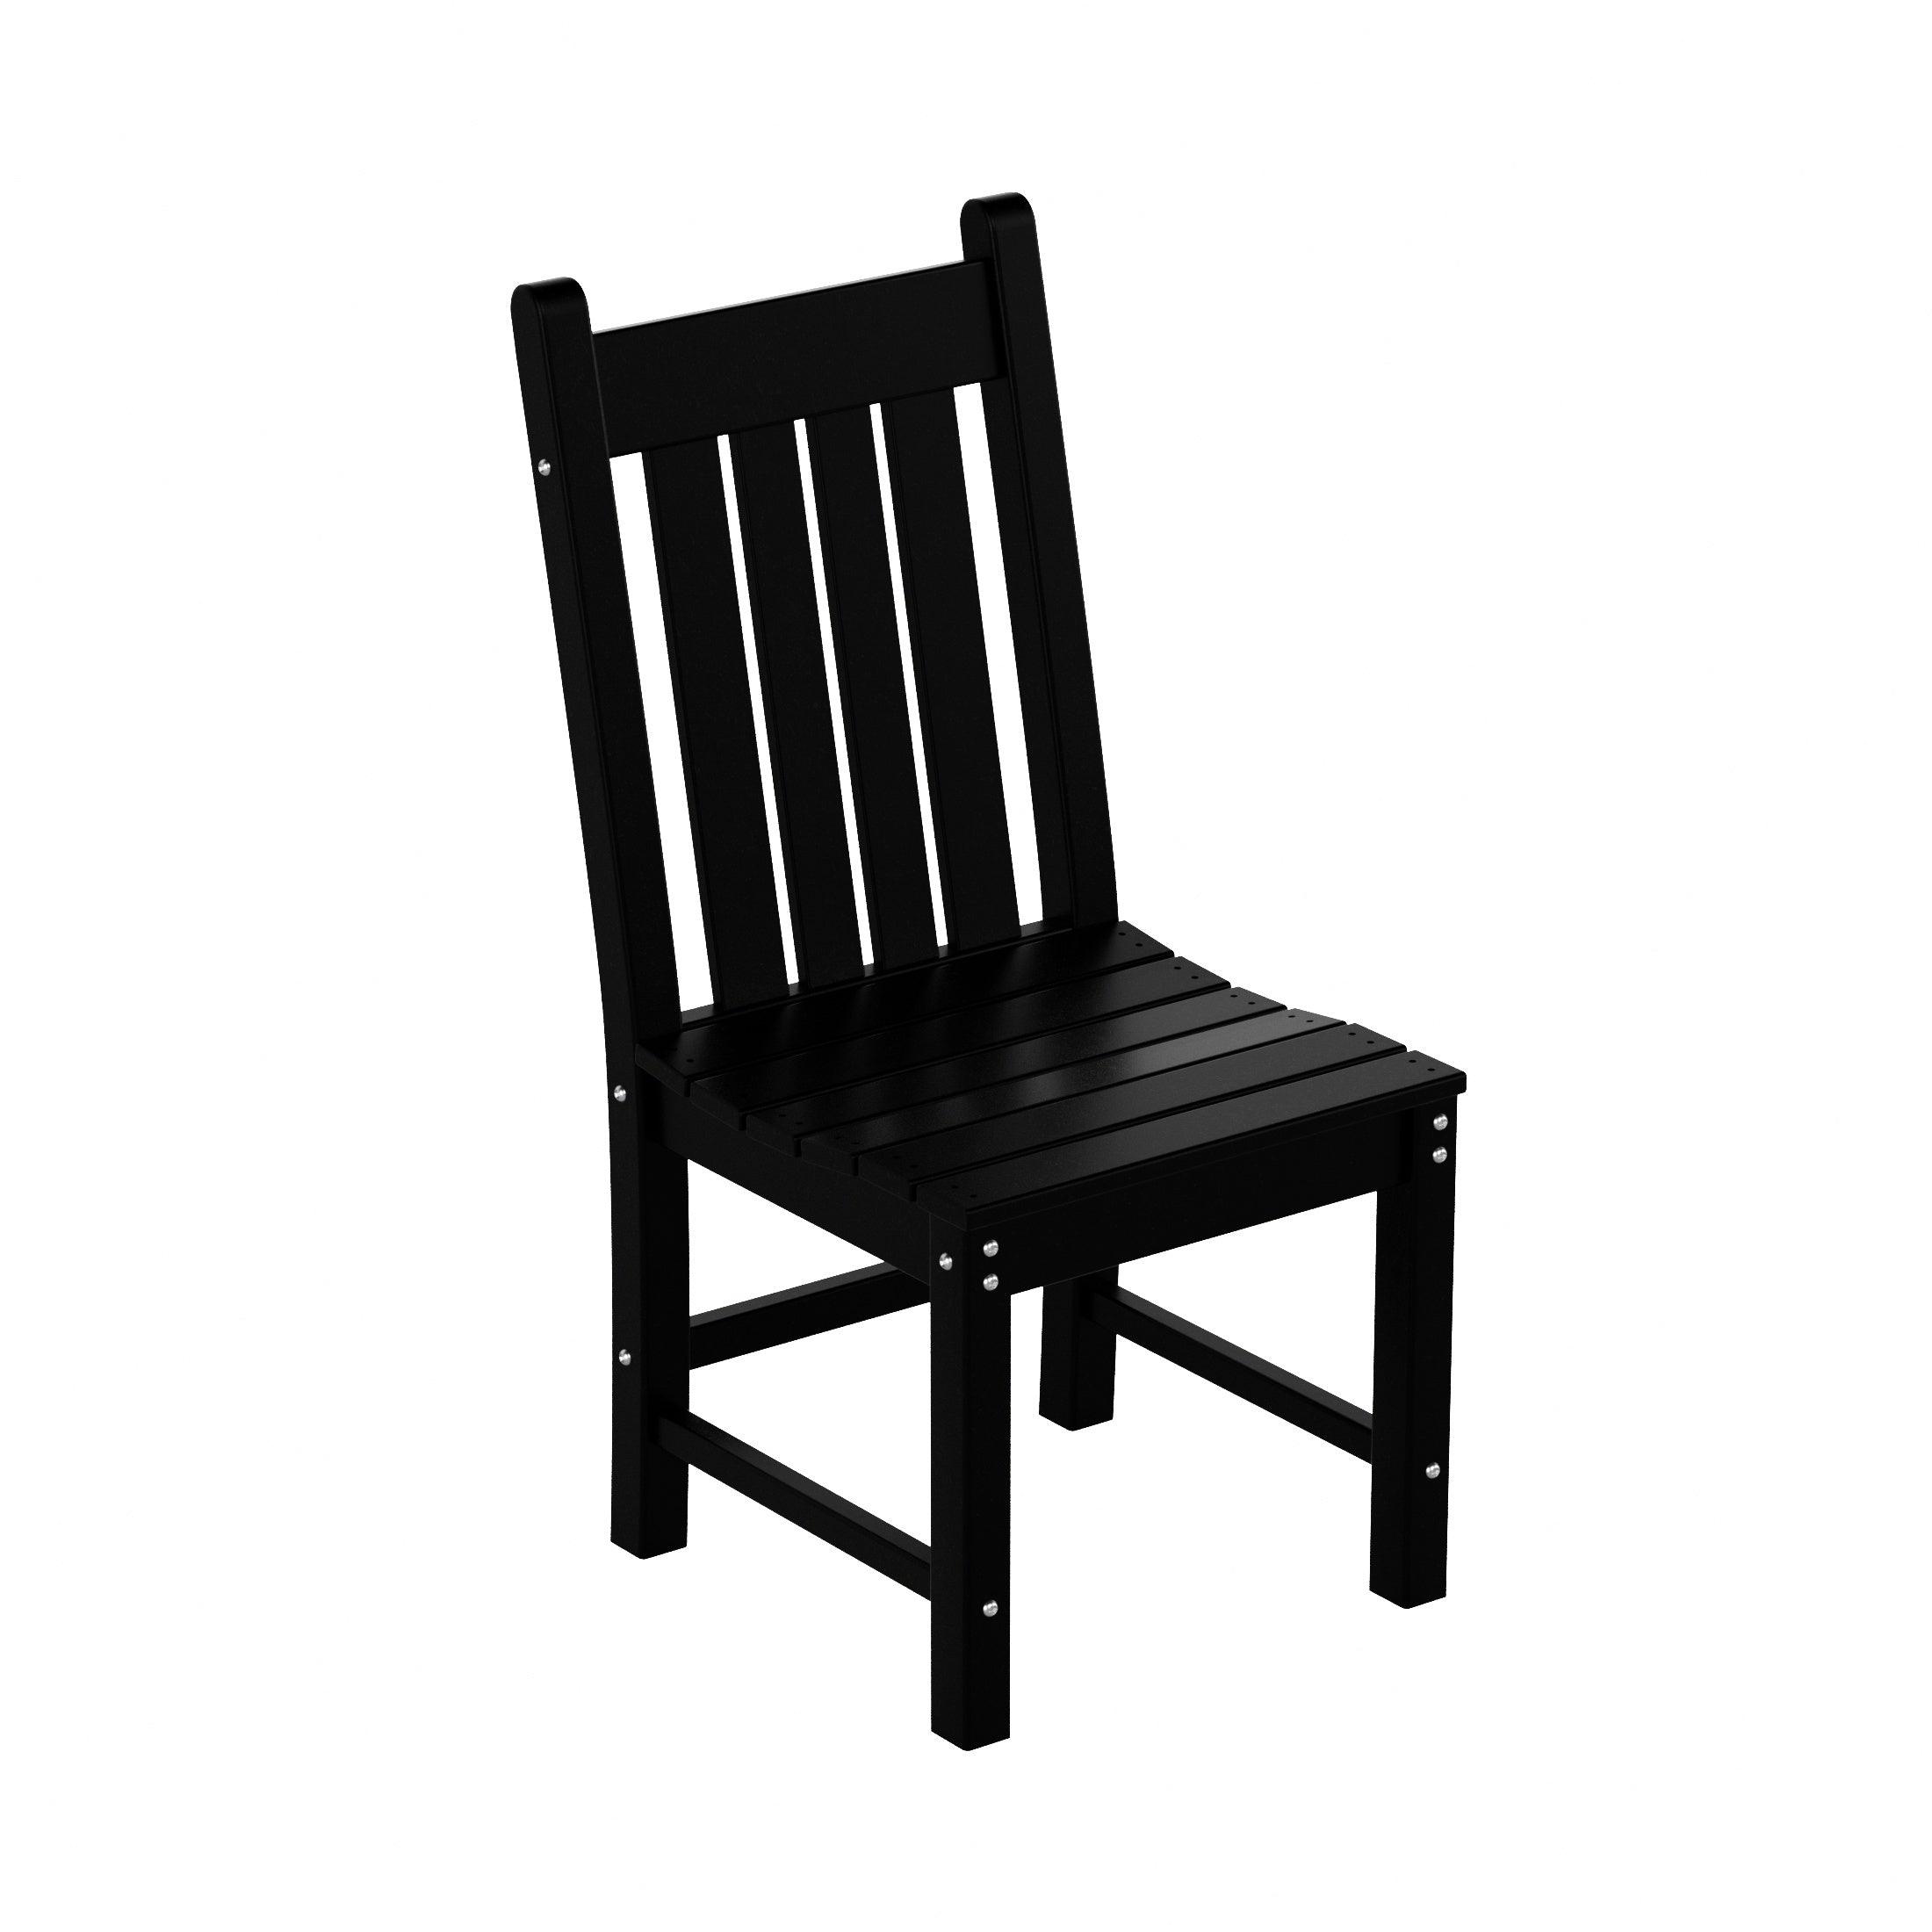 PARADISE Patio Dining Chair,Black